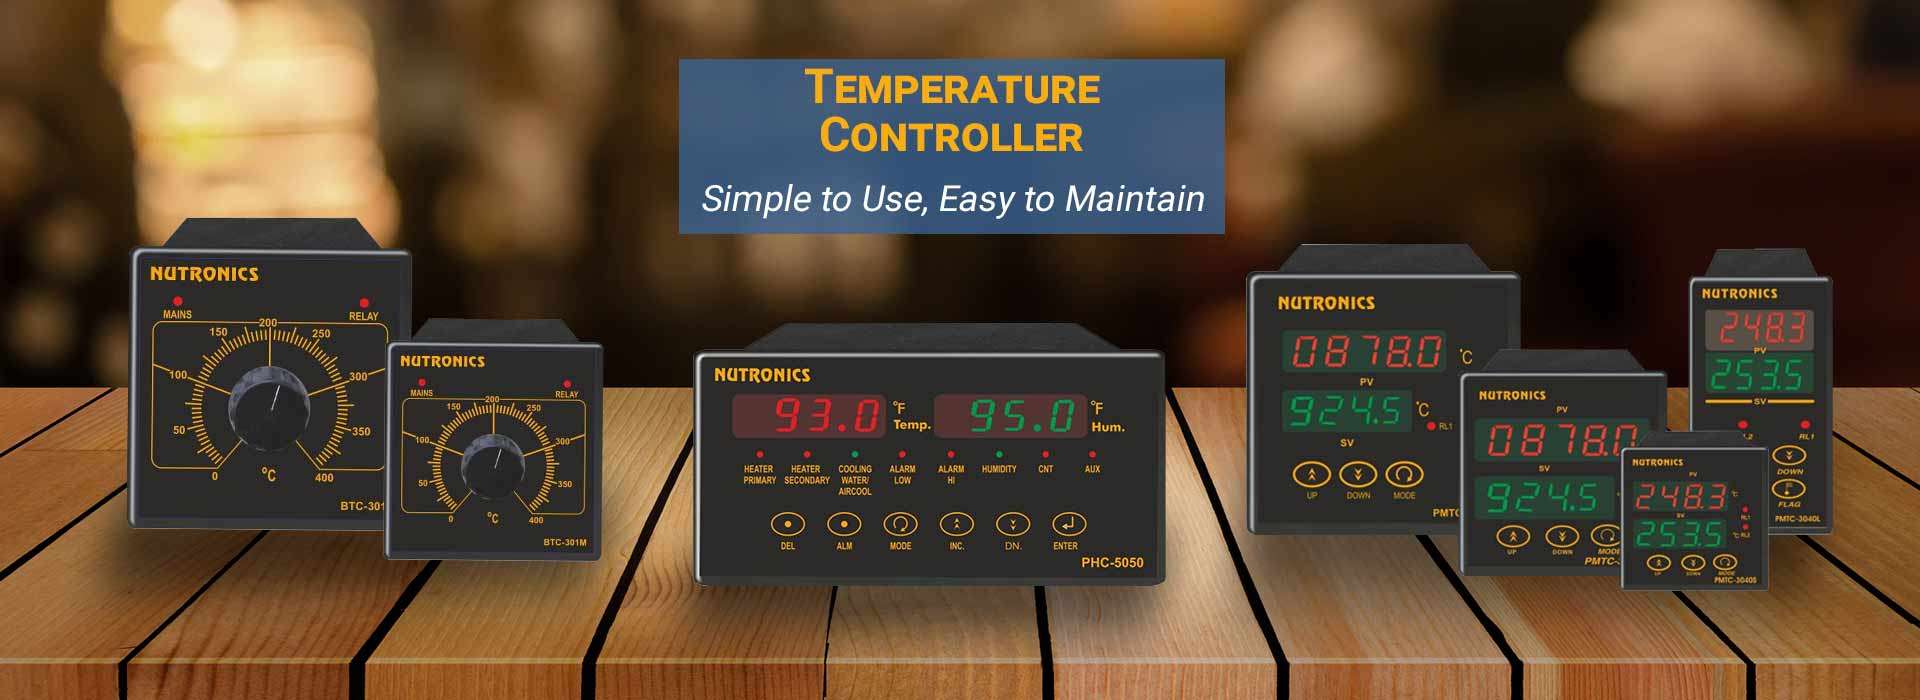 Temperature controller in Delhi